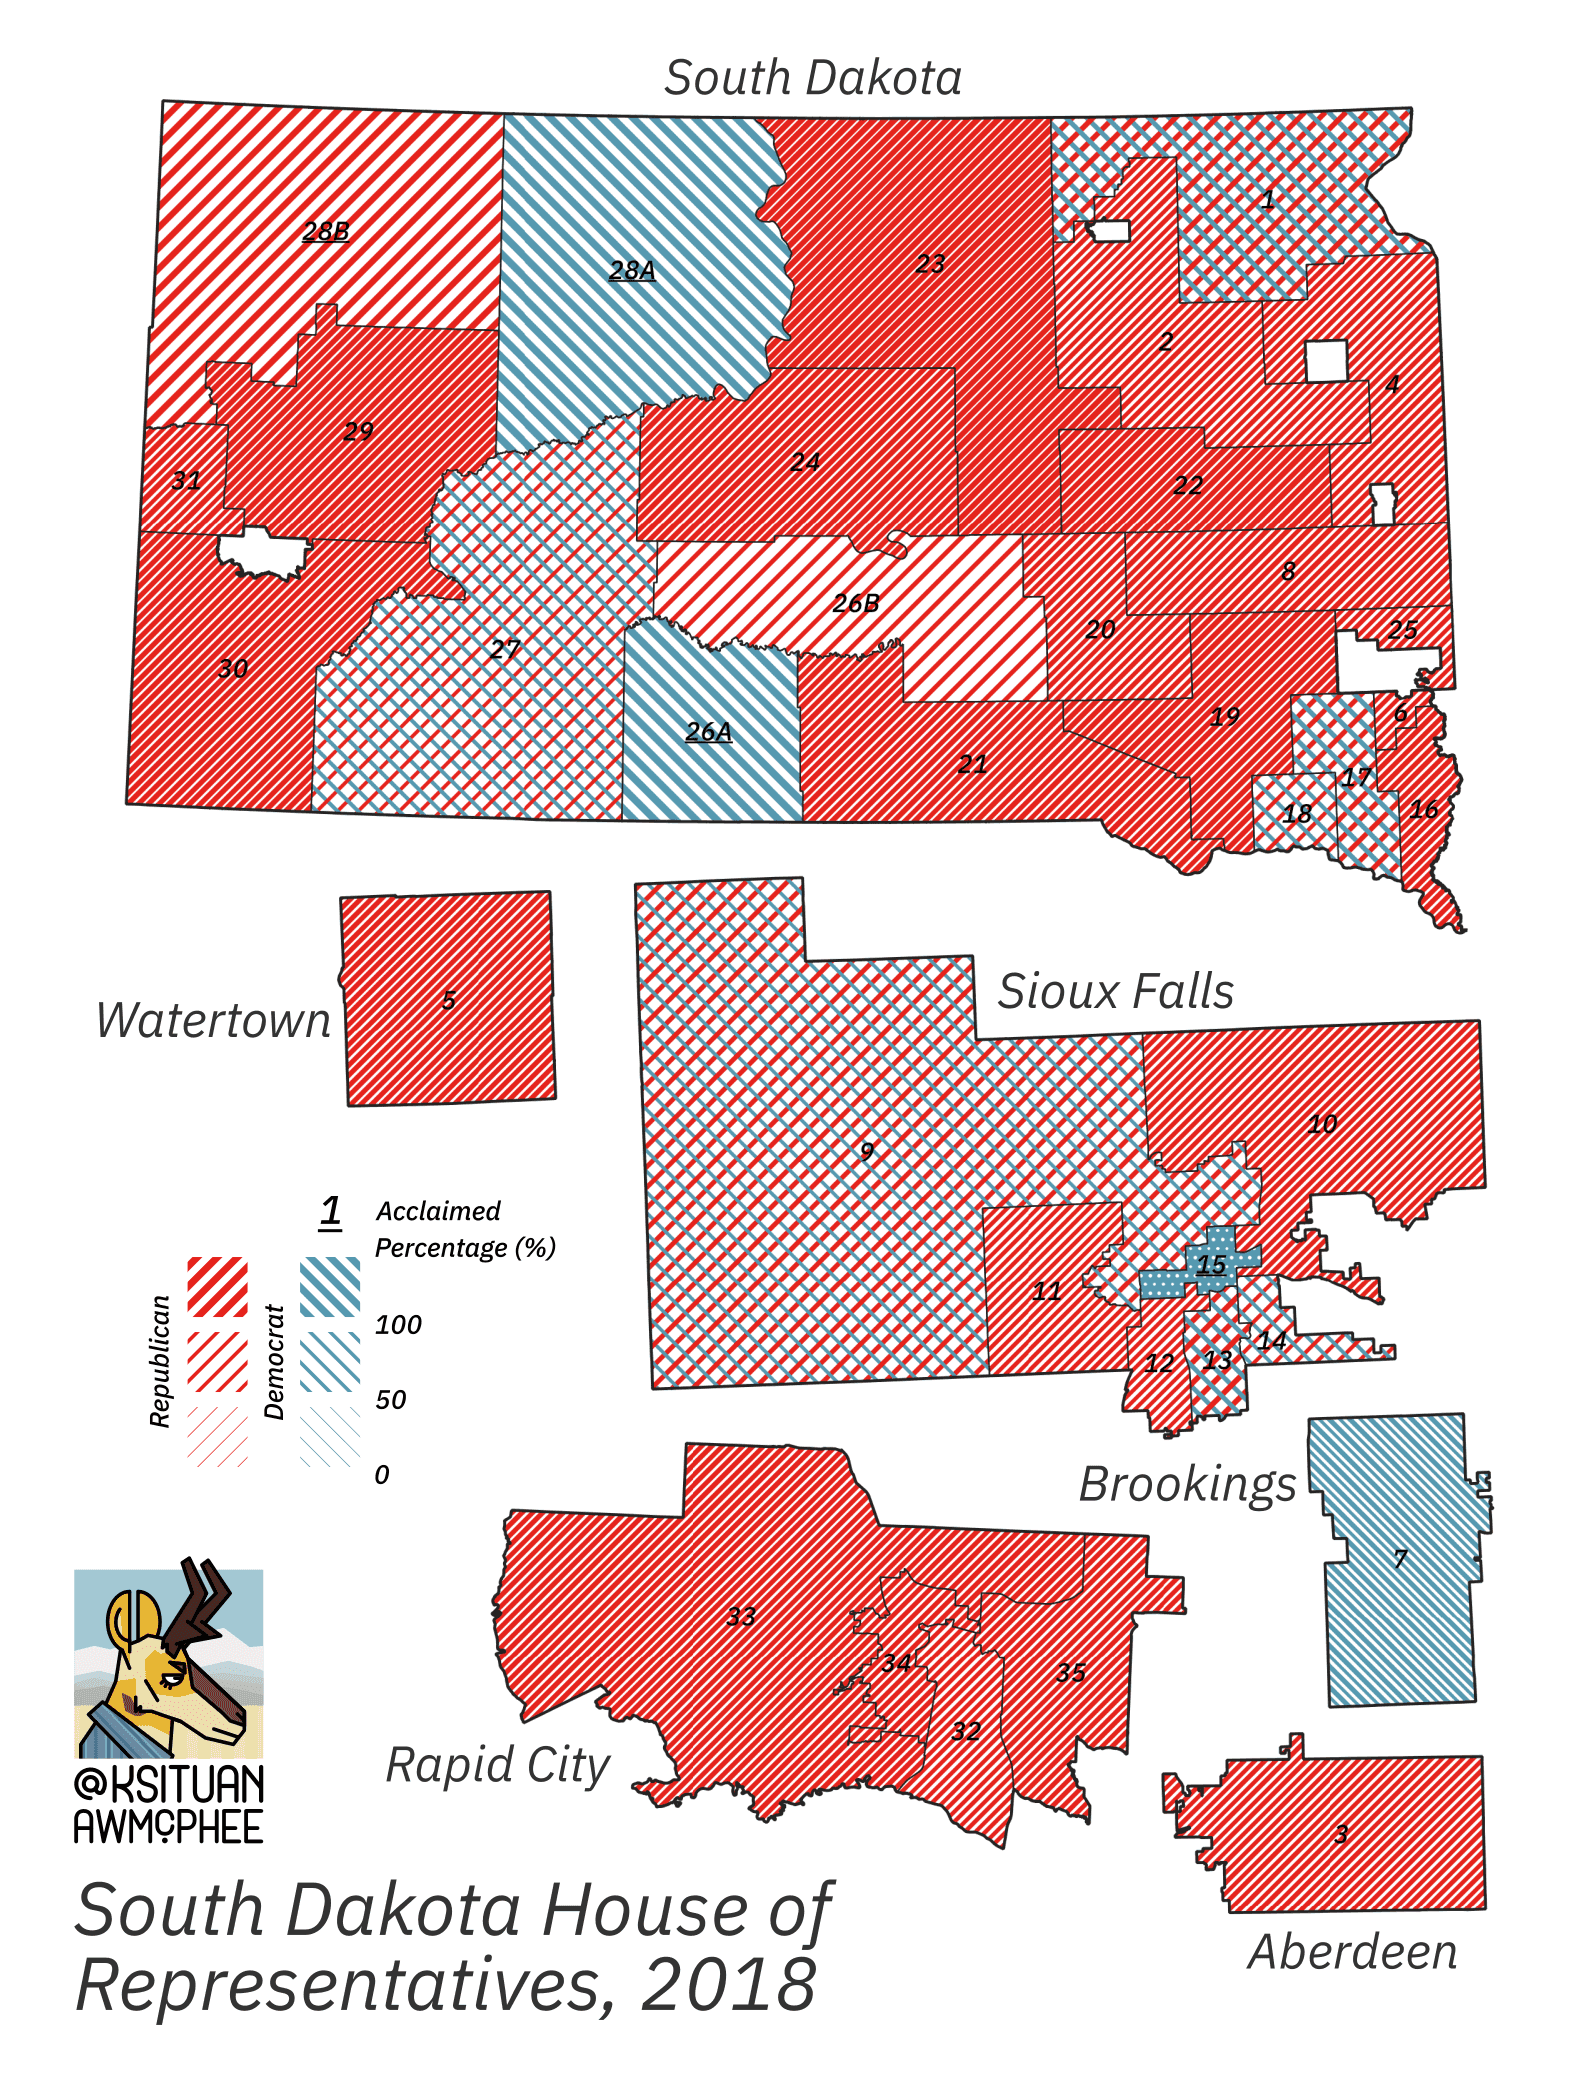 A political map of South Dakota.